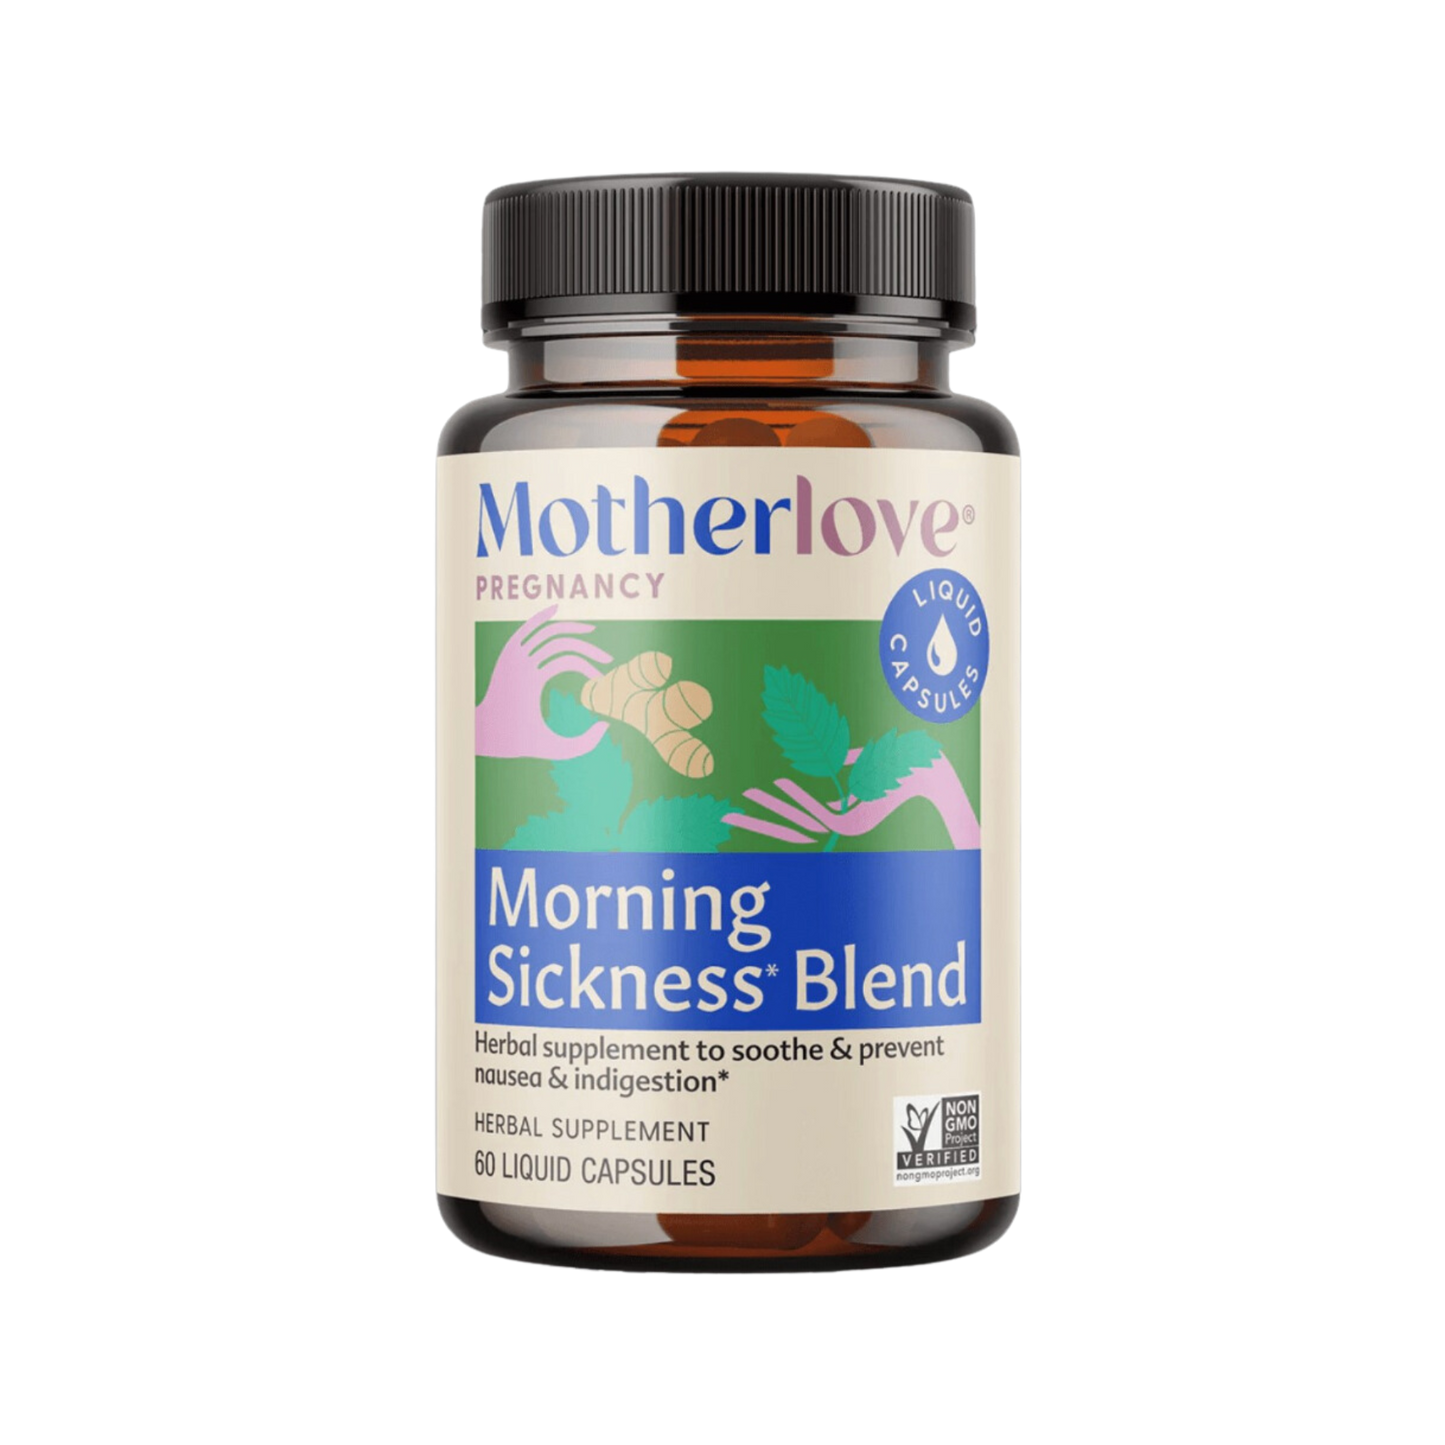 Motherlove Morning Sickness Blend